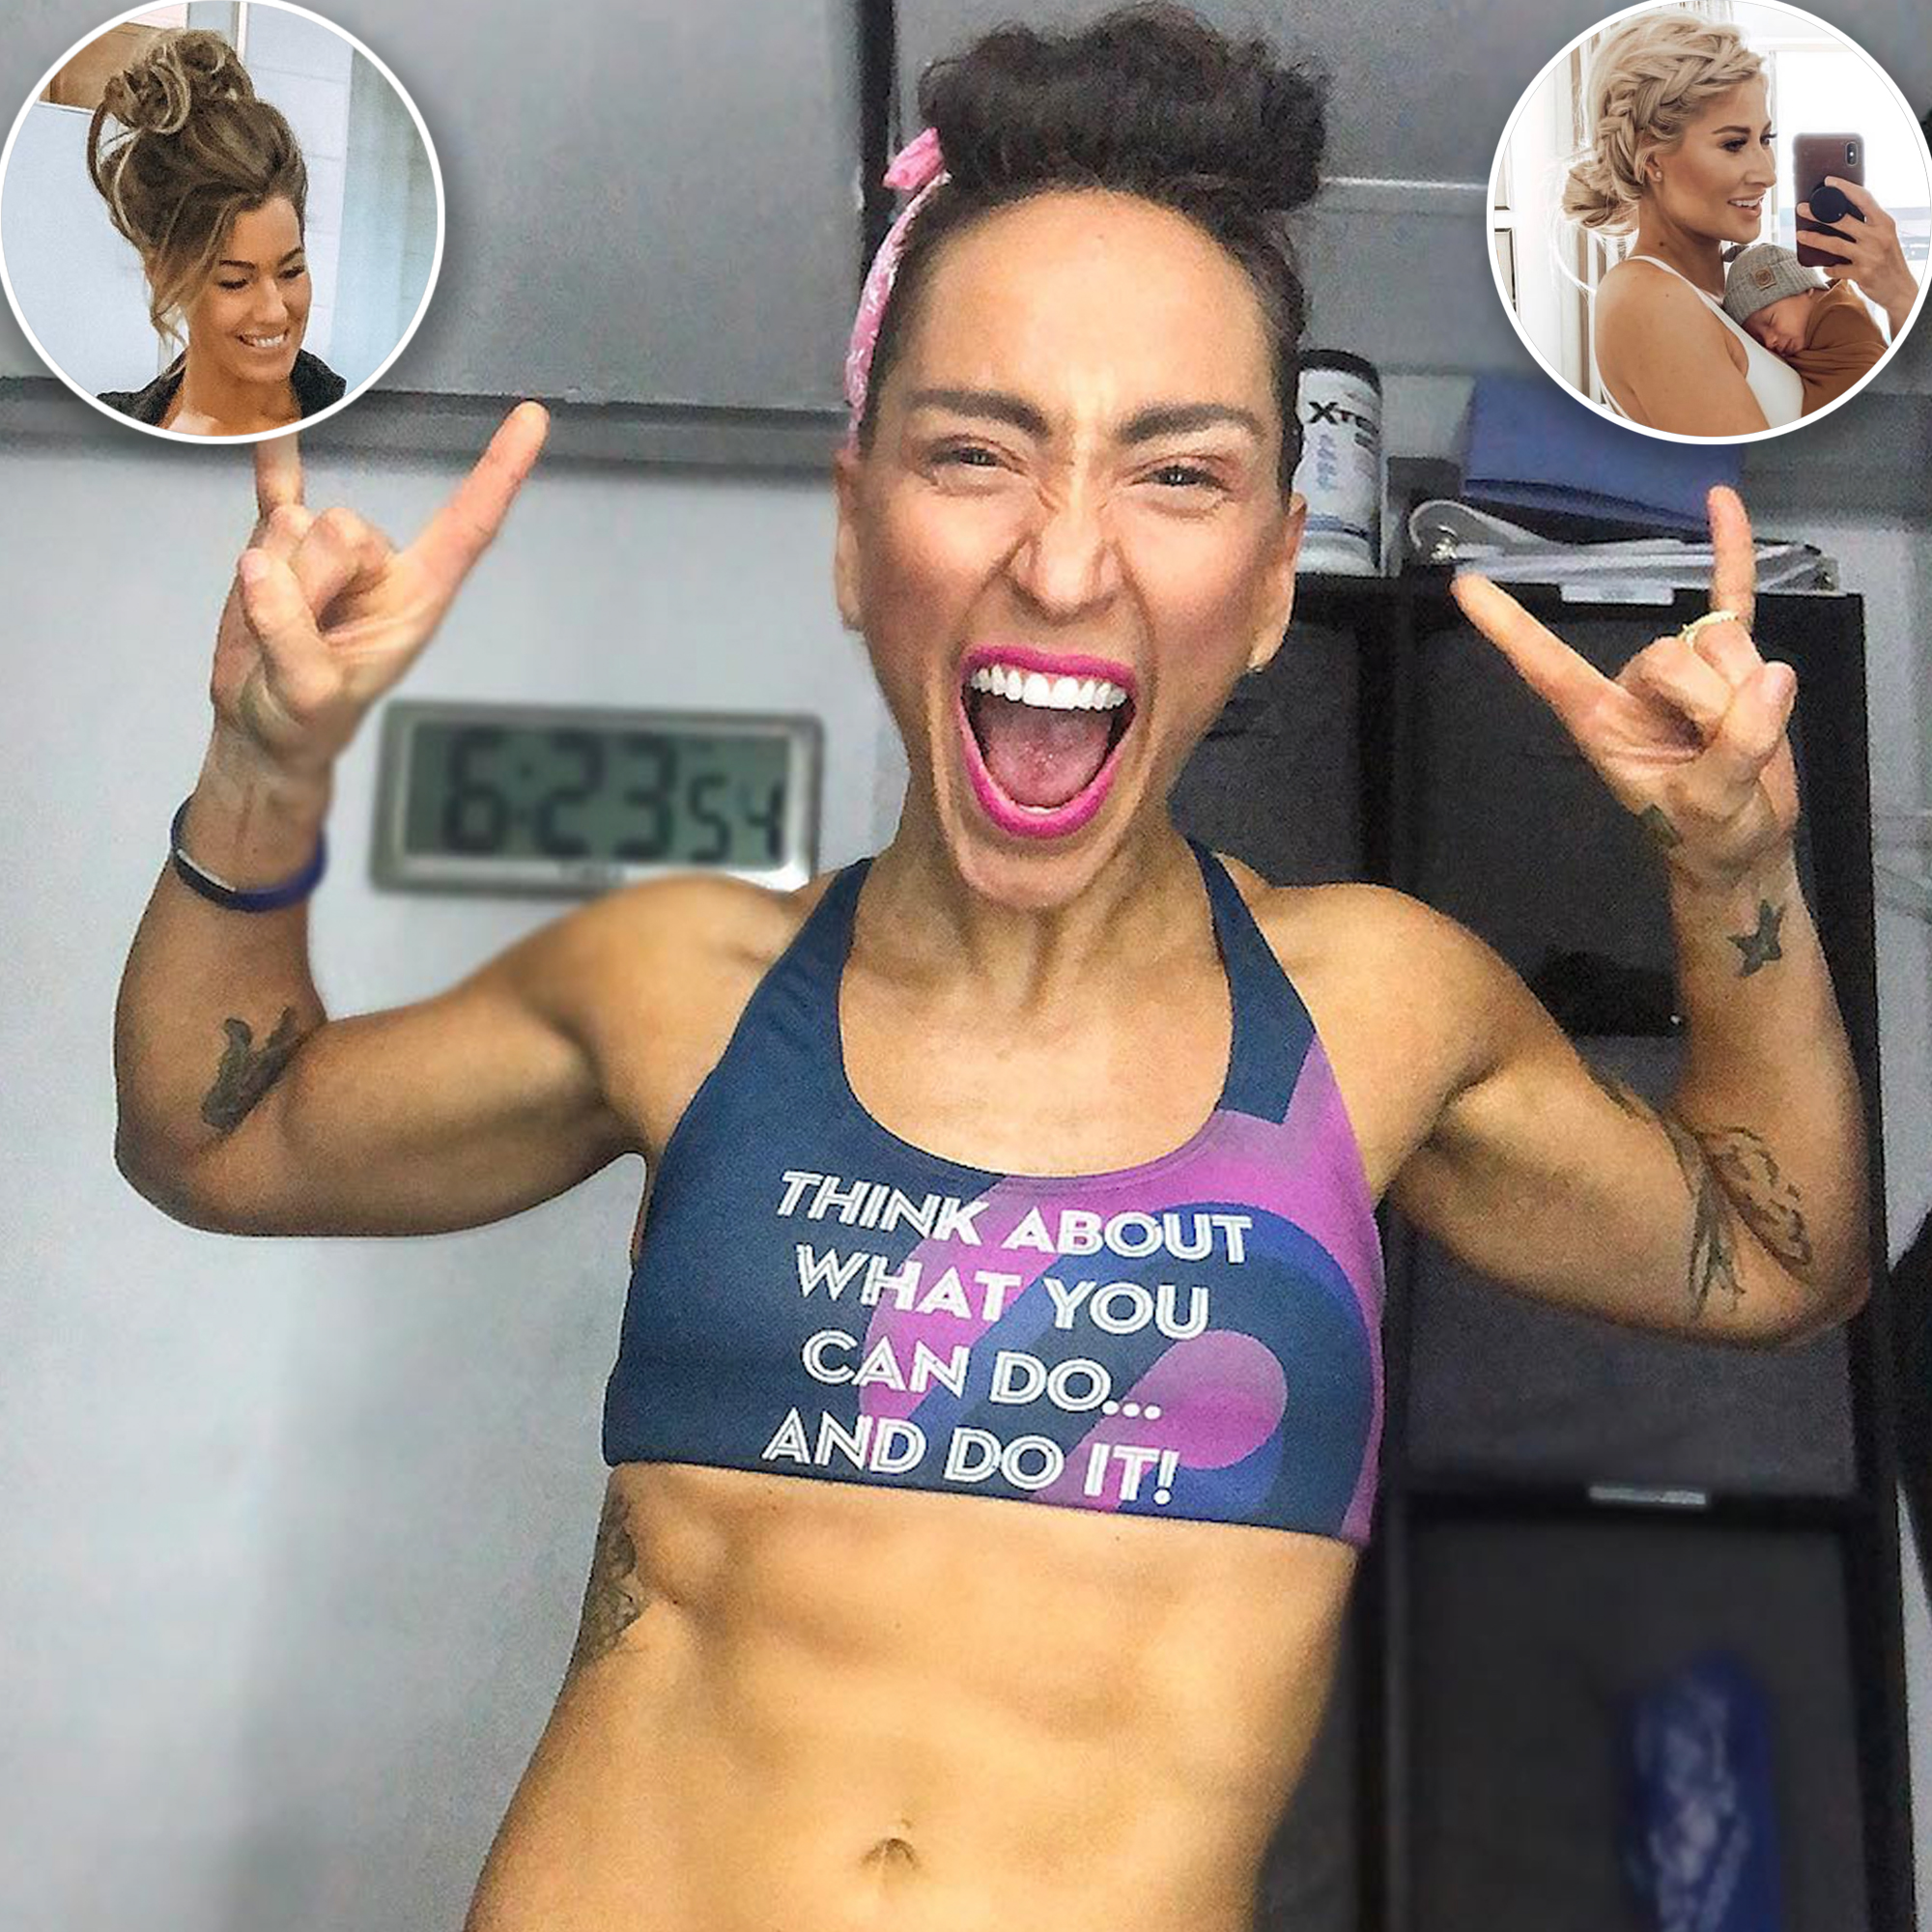 Top 10 Women's Fitness Influencers on Instagram